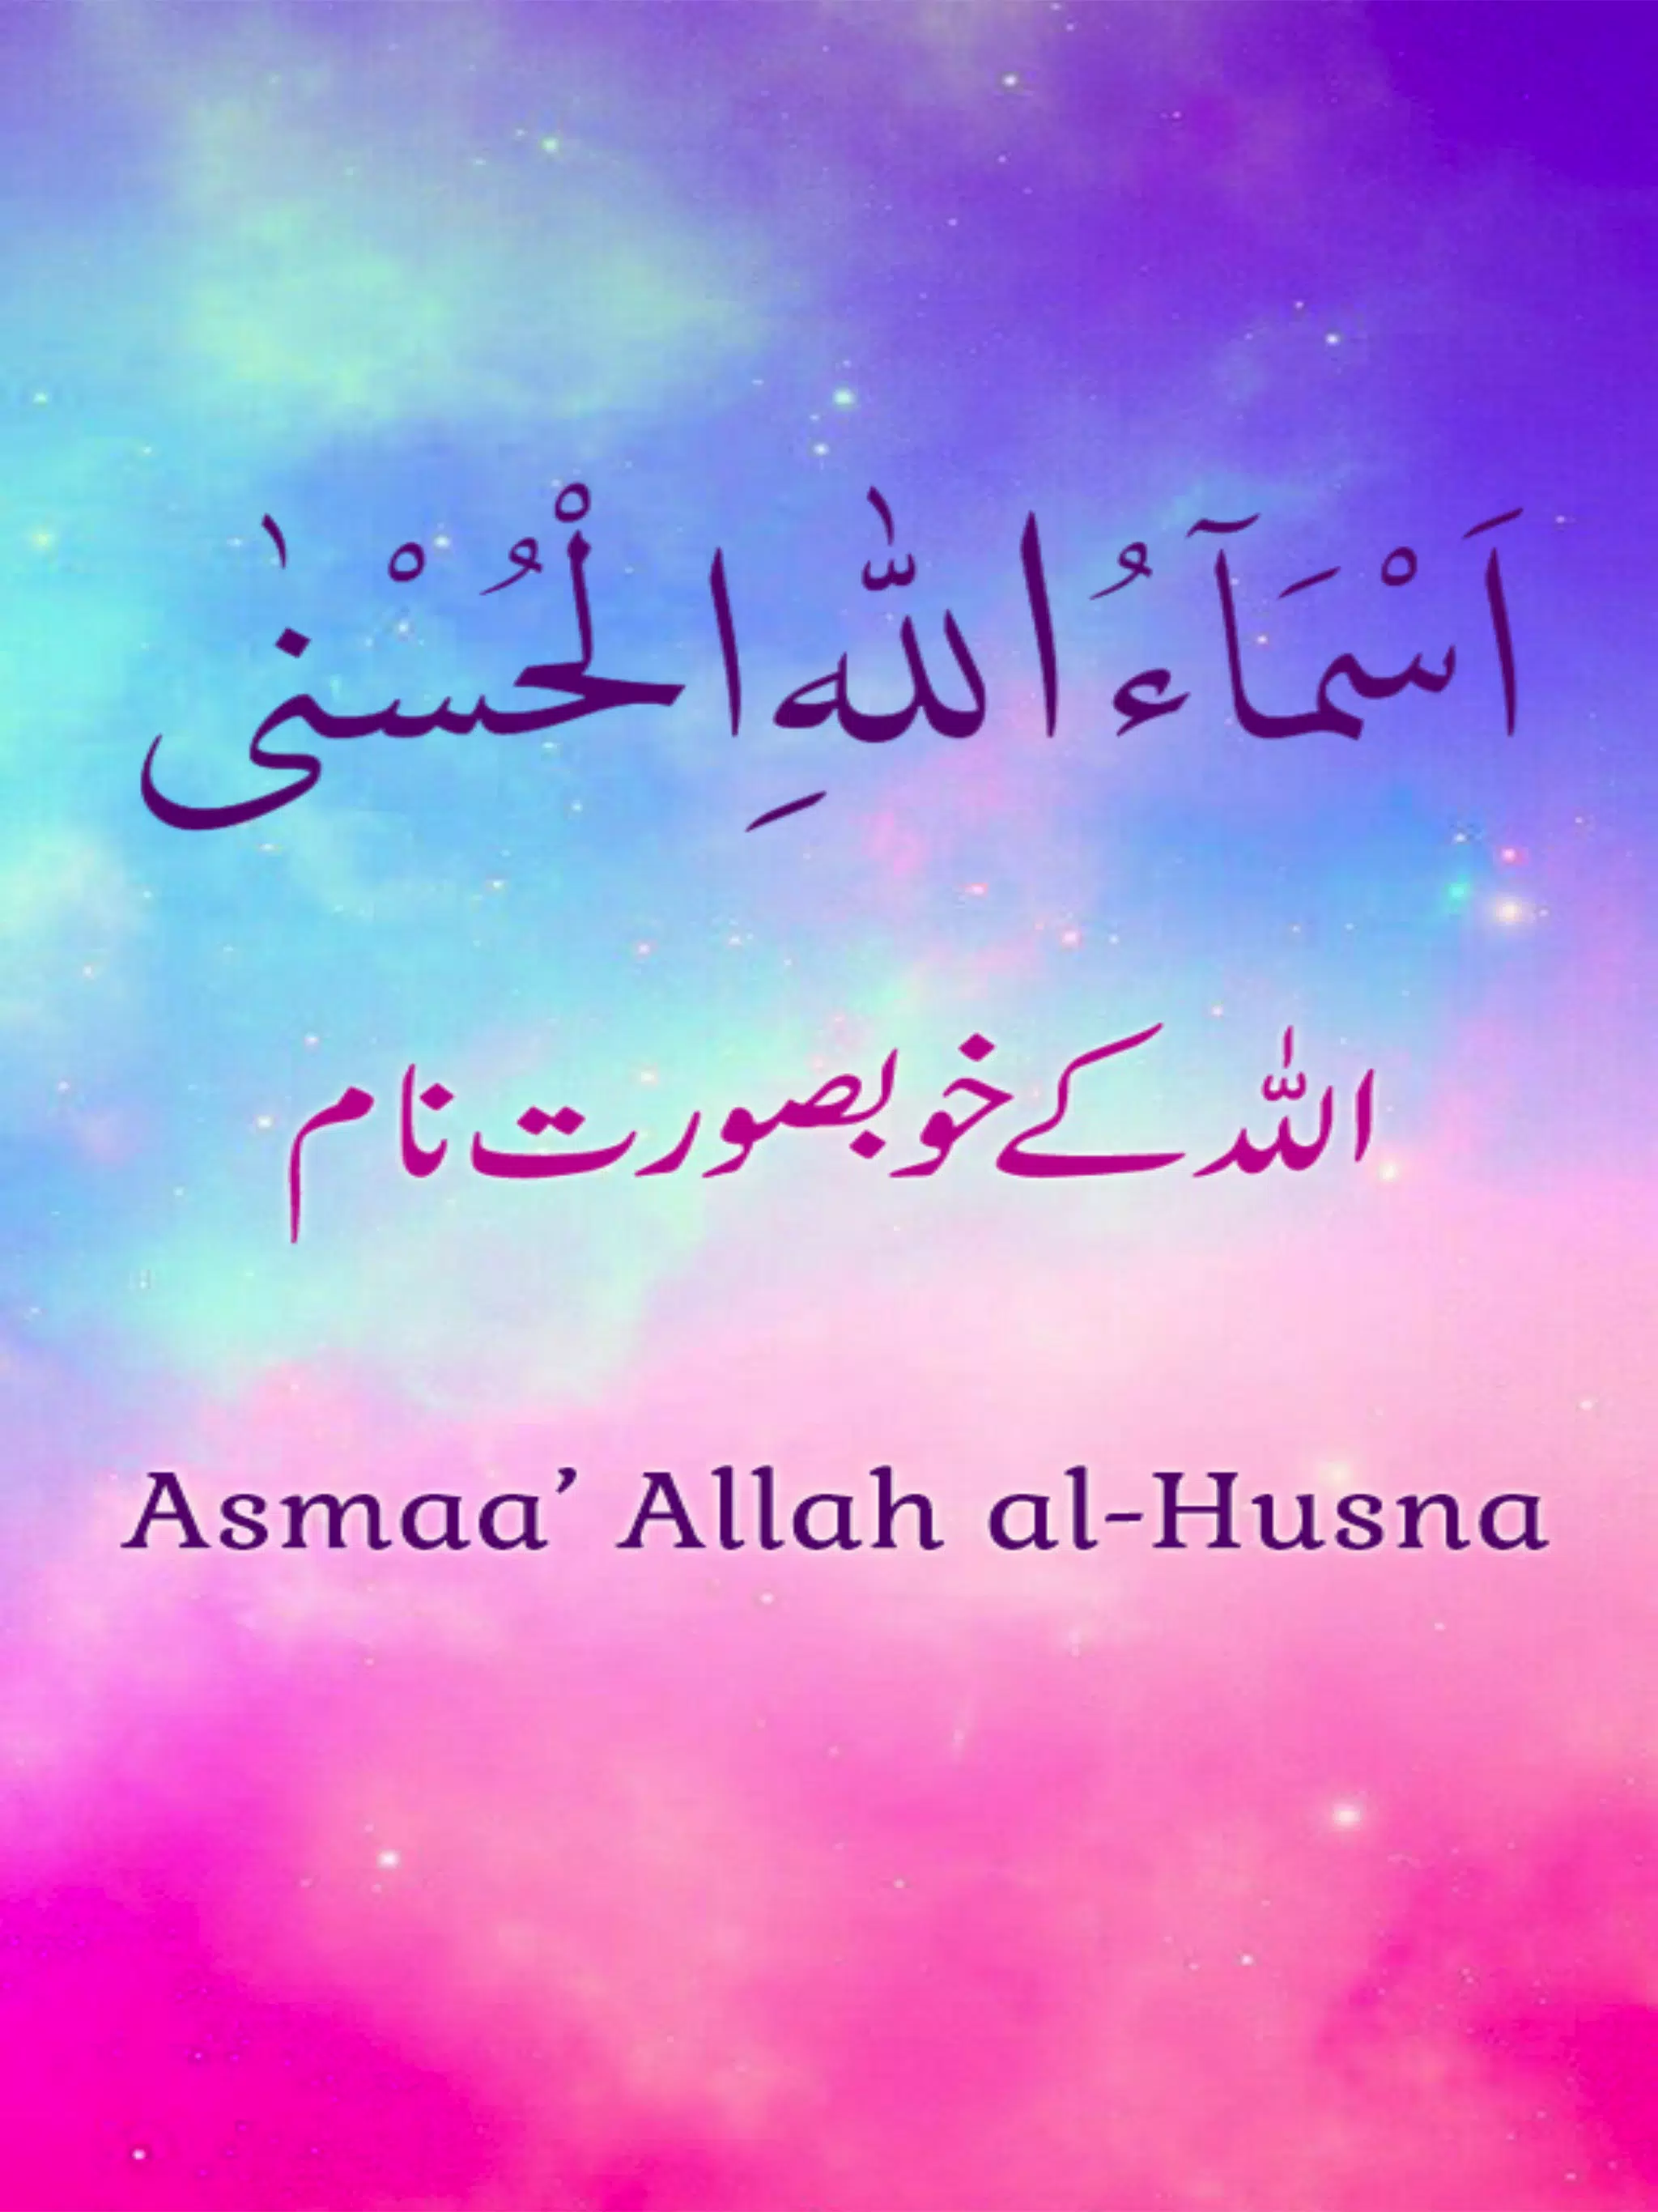 Asmaa' Allah al-Husna APK for Android Download